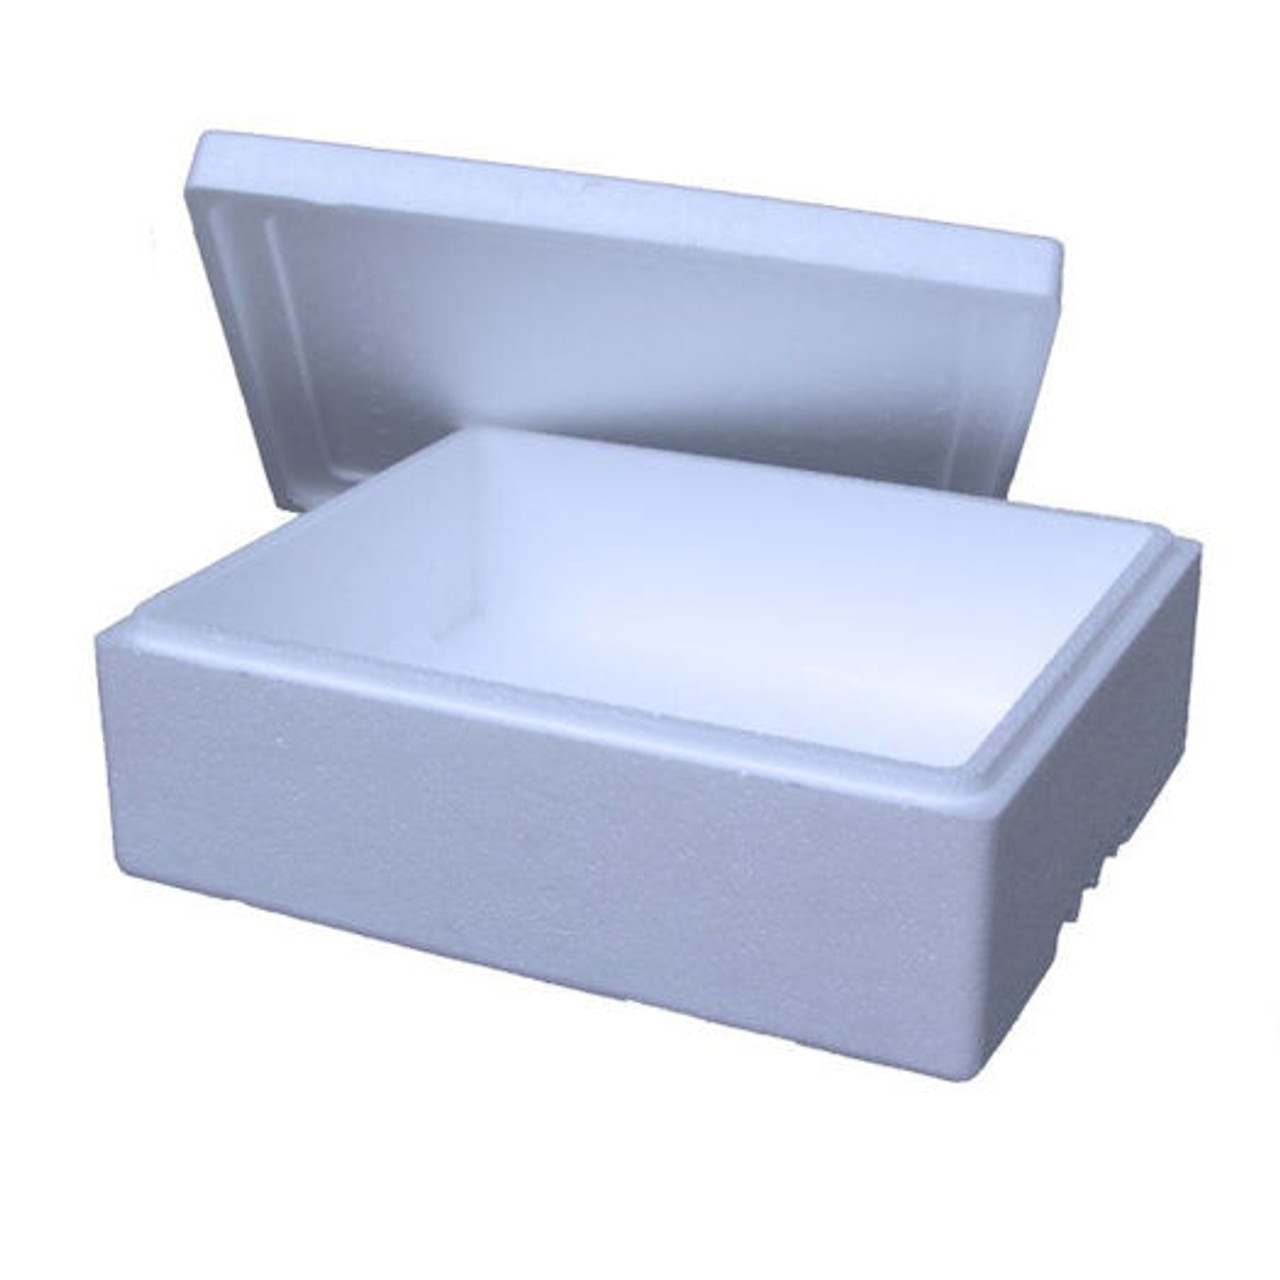 8klo 420x340x165mm p/styrne box & lids ( 20 boxes )